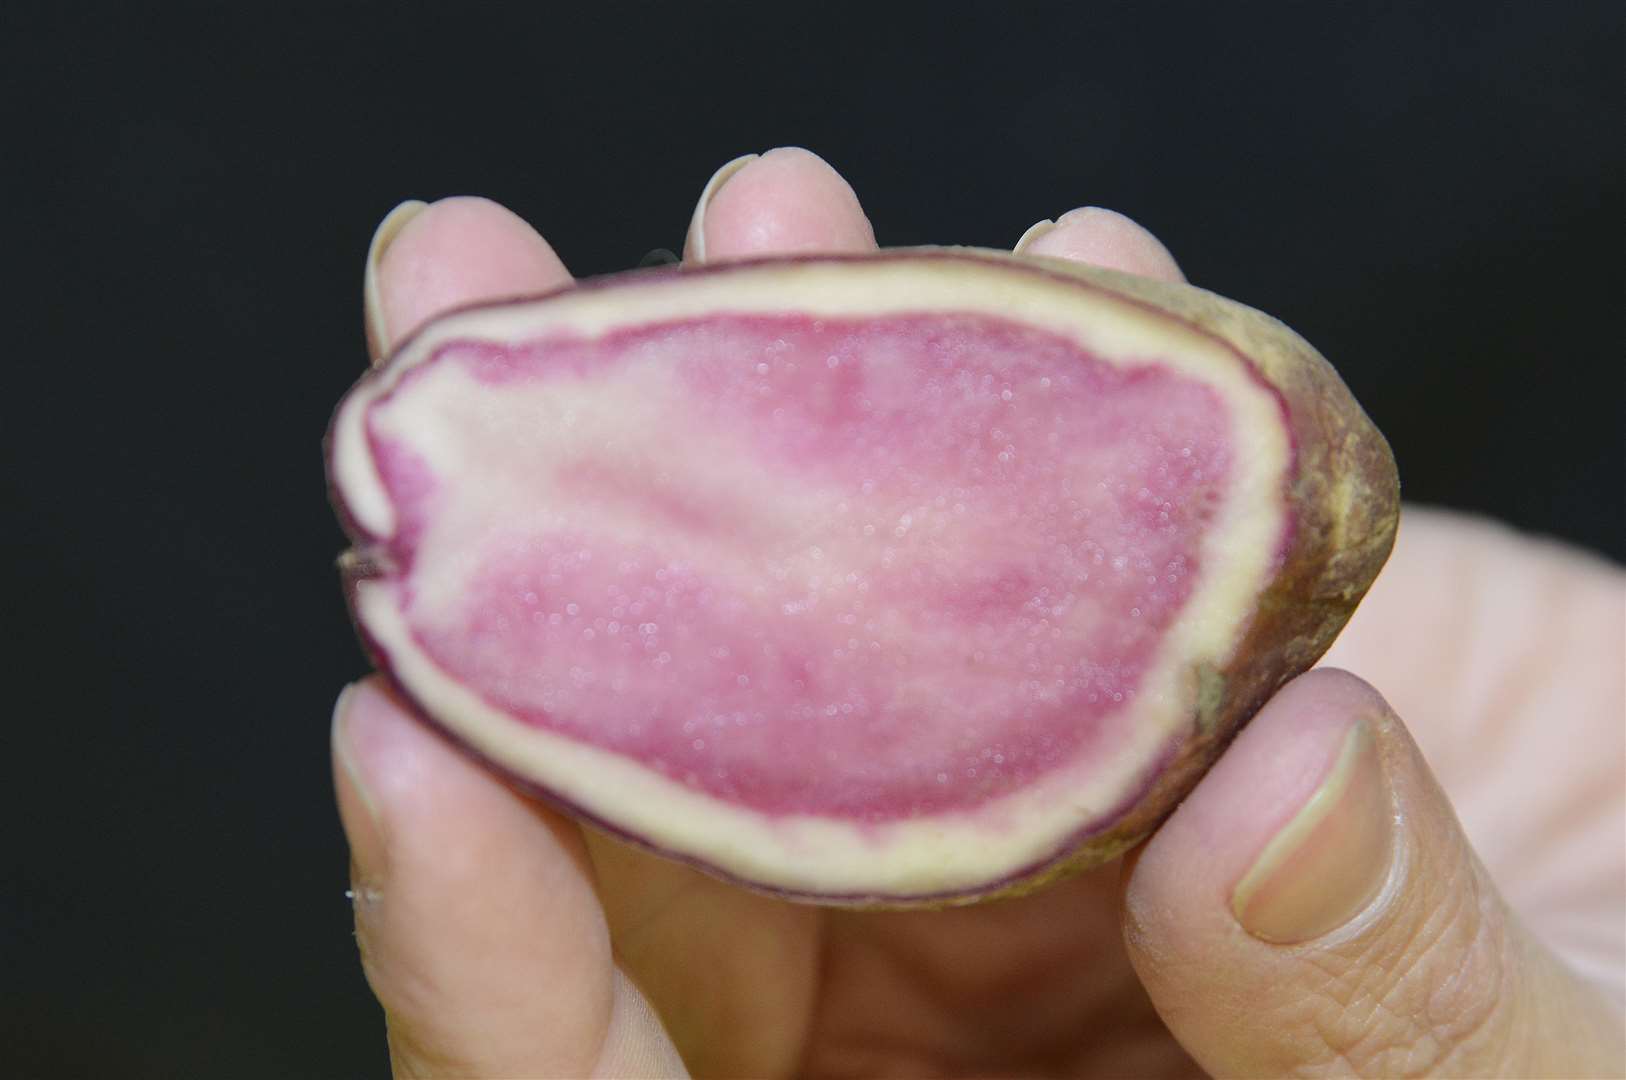 A Hyland Burgundy Red potato